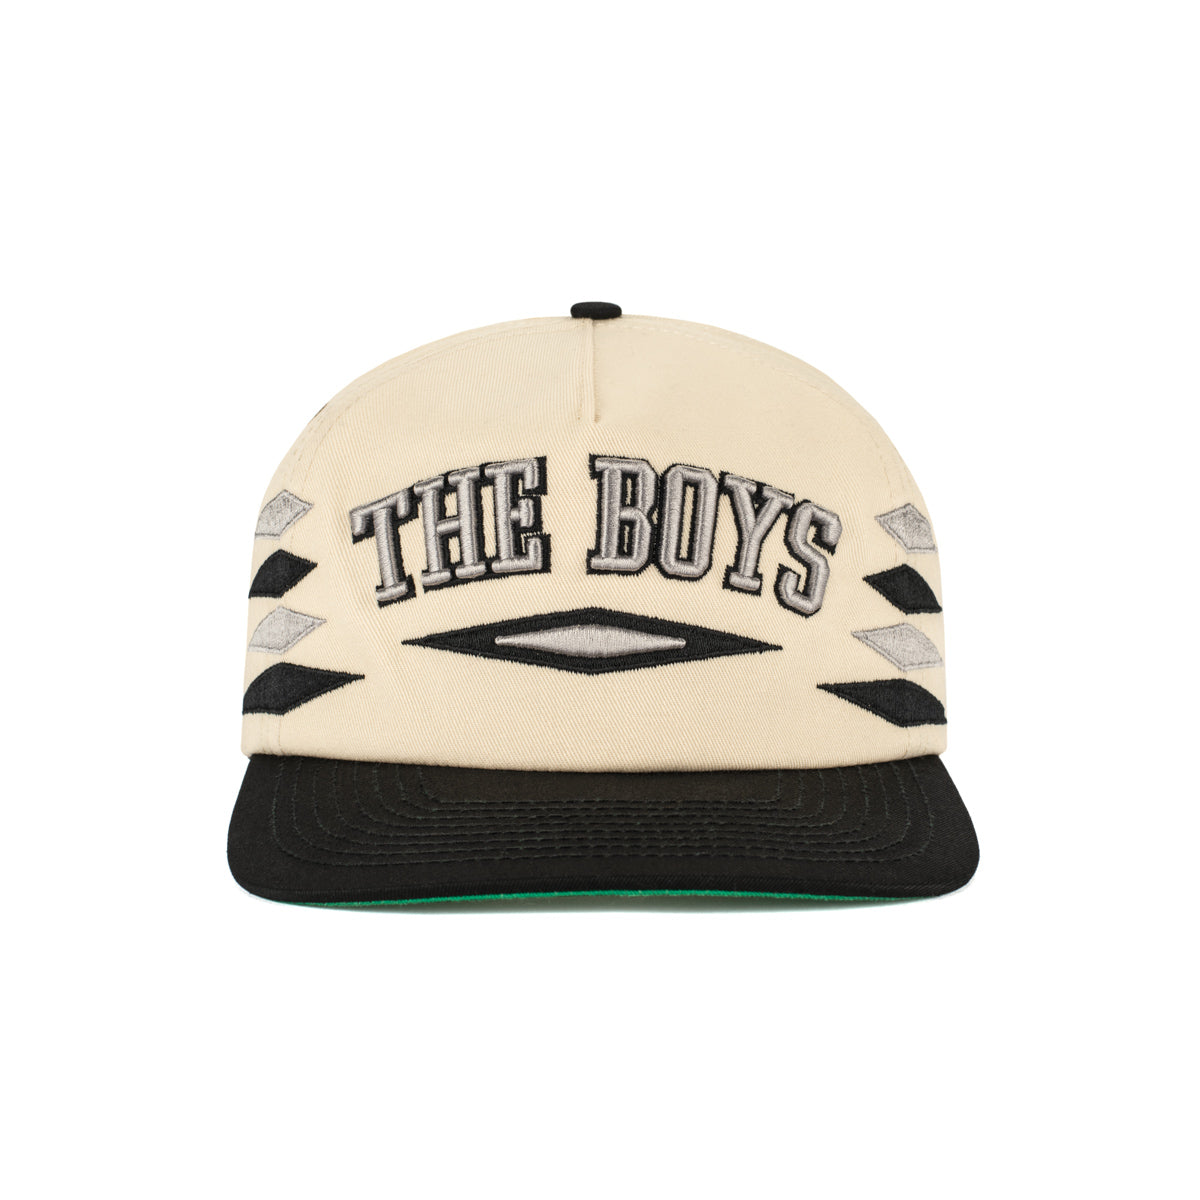 The Boys Diamond Retro Hat-Hats-Bussin With The Boys-Tan/Black-Barstool Sports